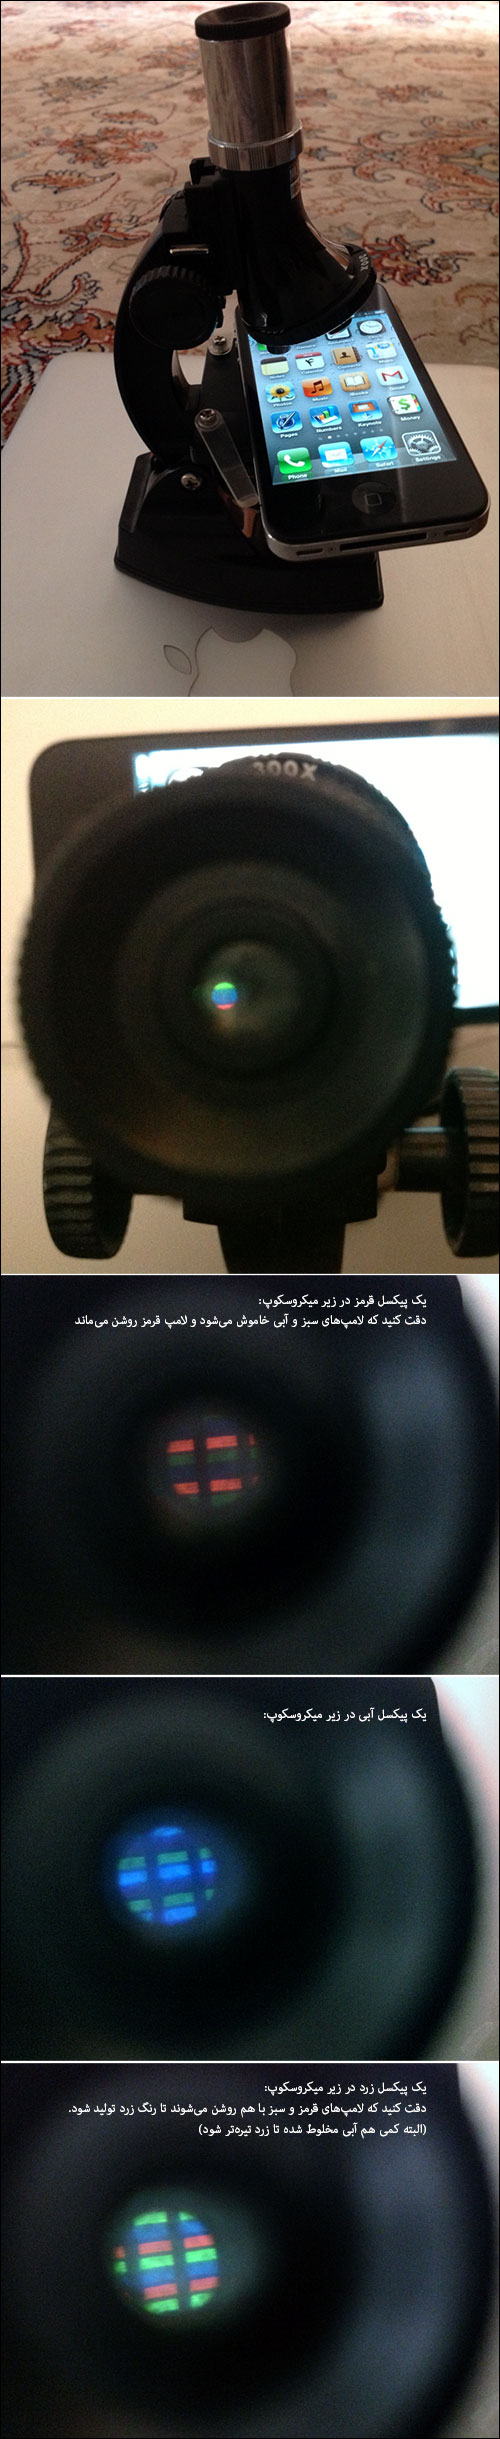 https://img.aftab.cc/news/94/pixels_under_microscope.jpg